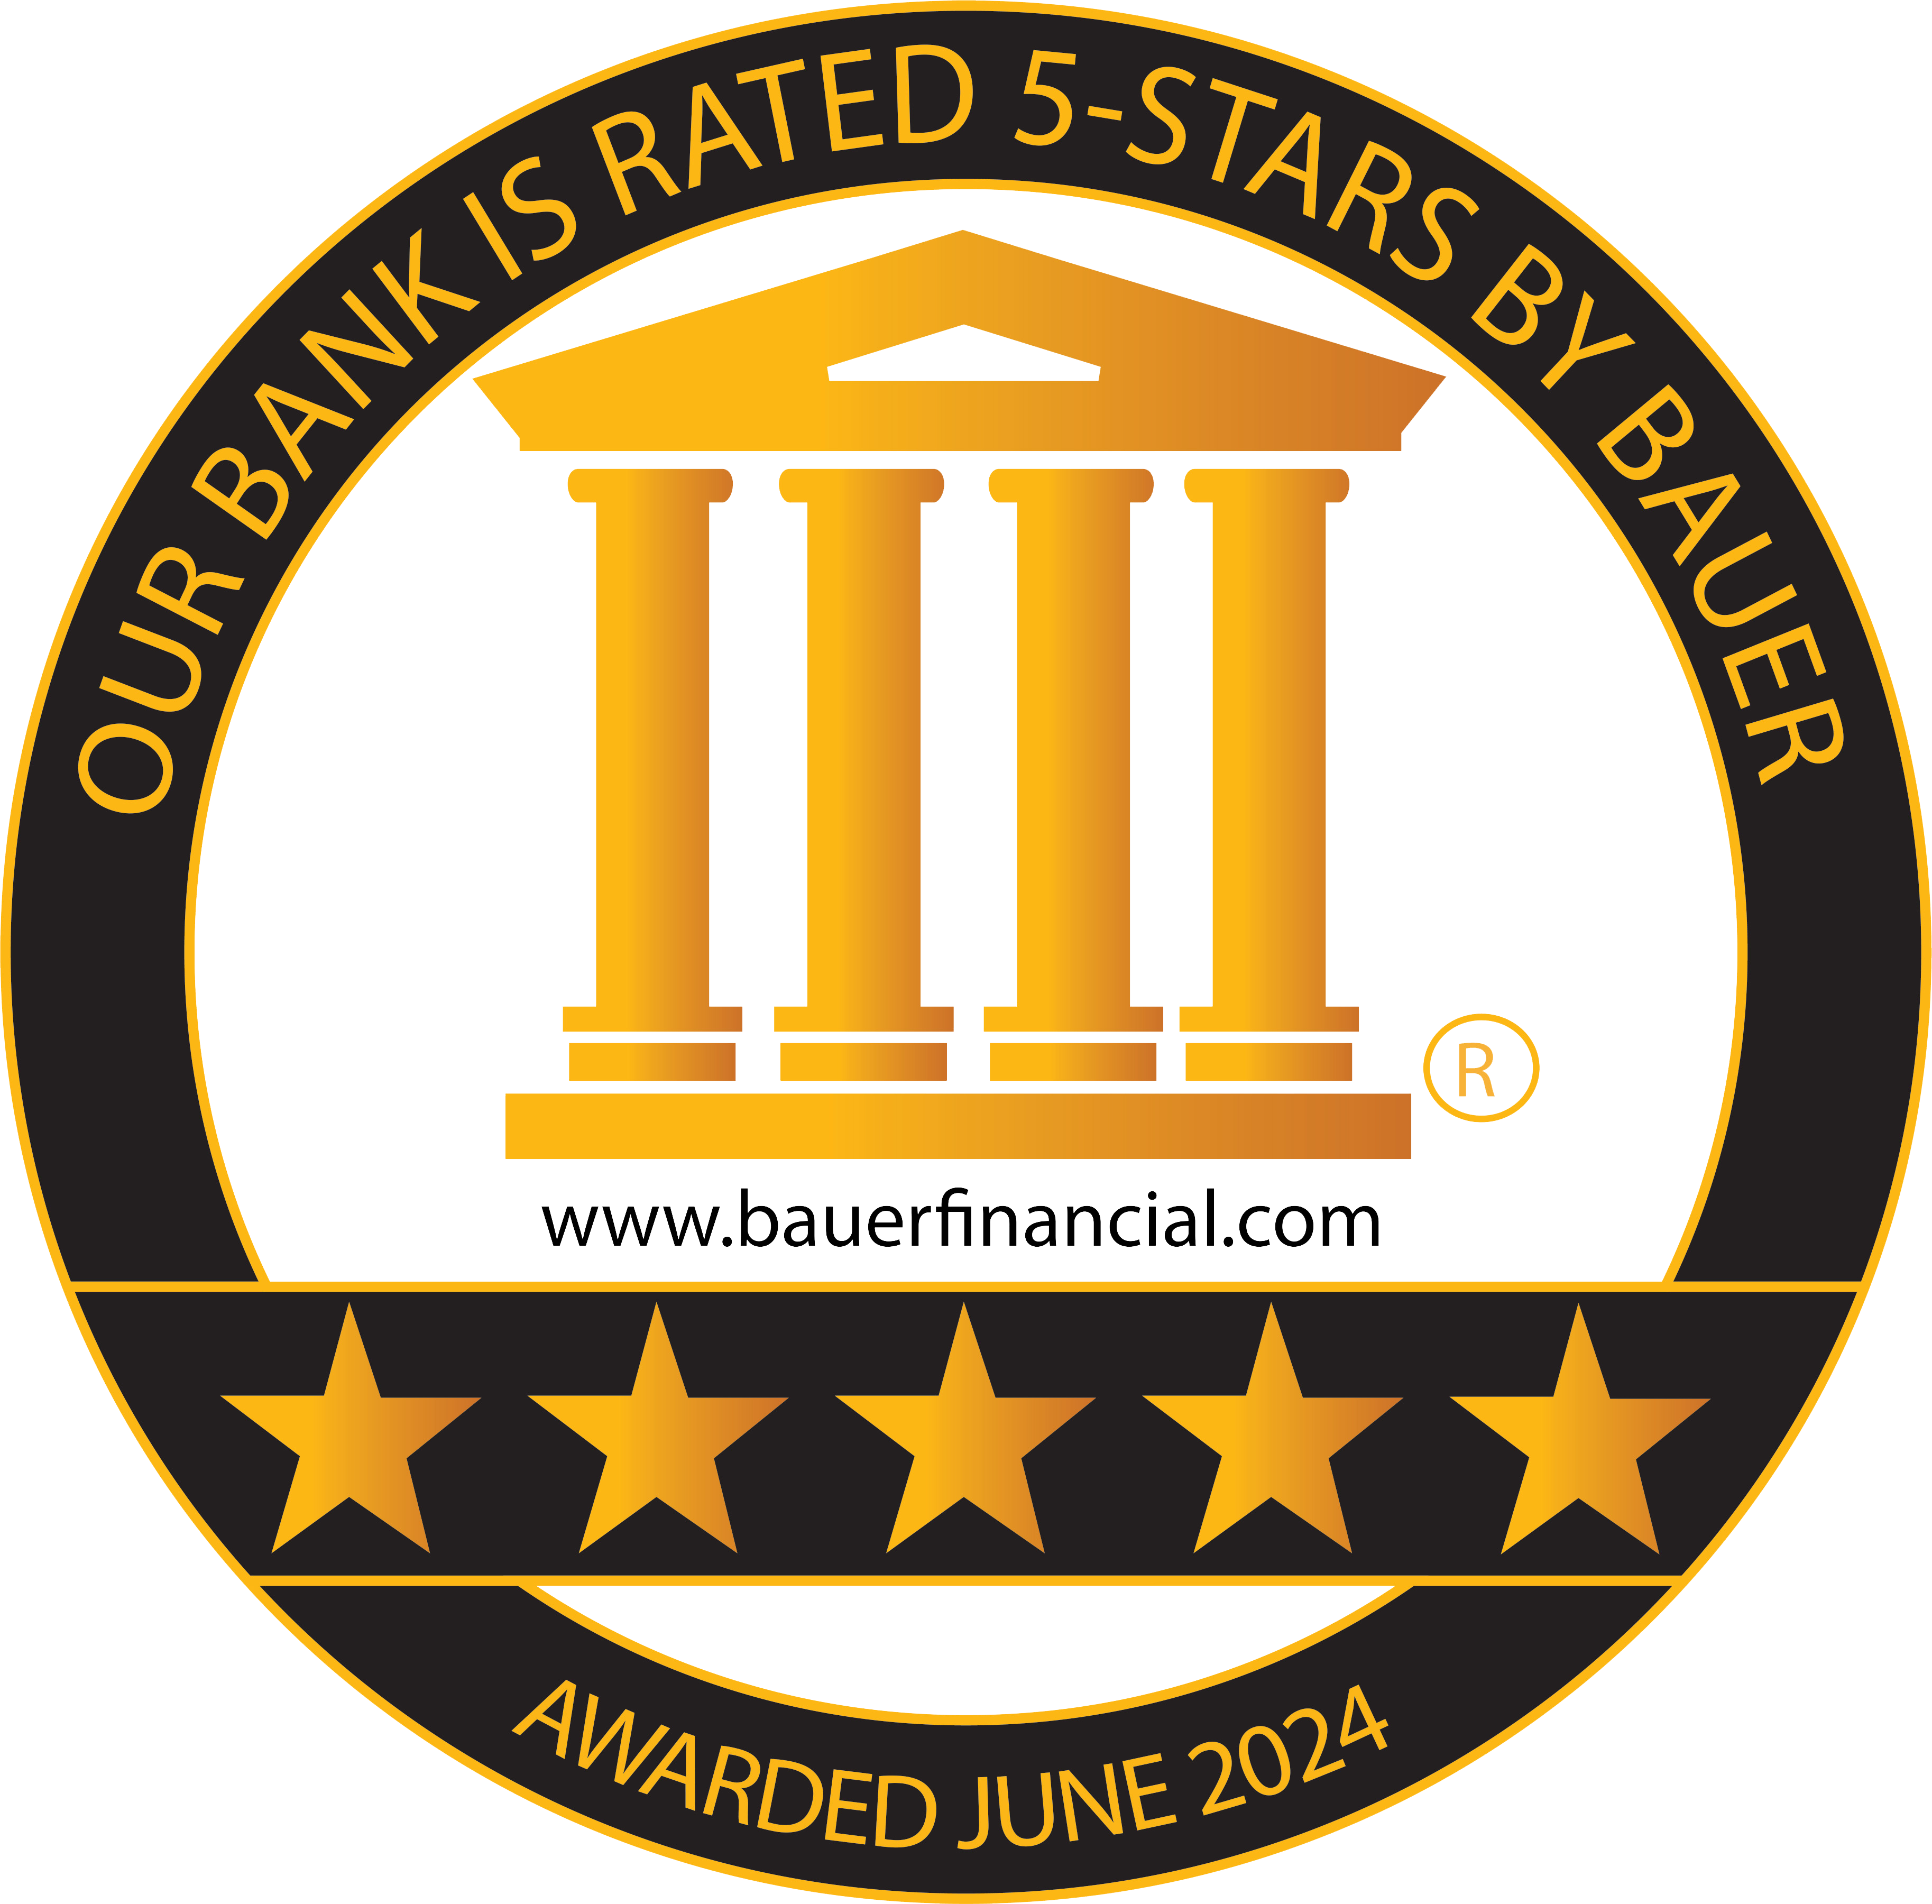 Bauer_5-star-bank-logo